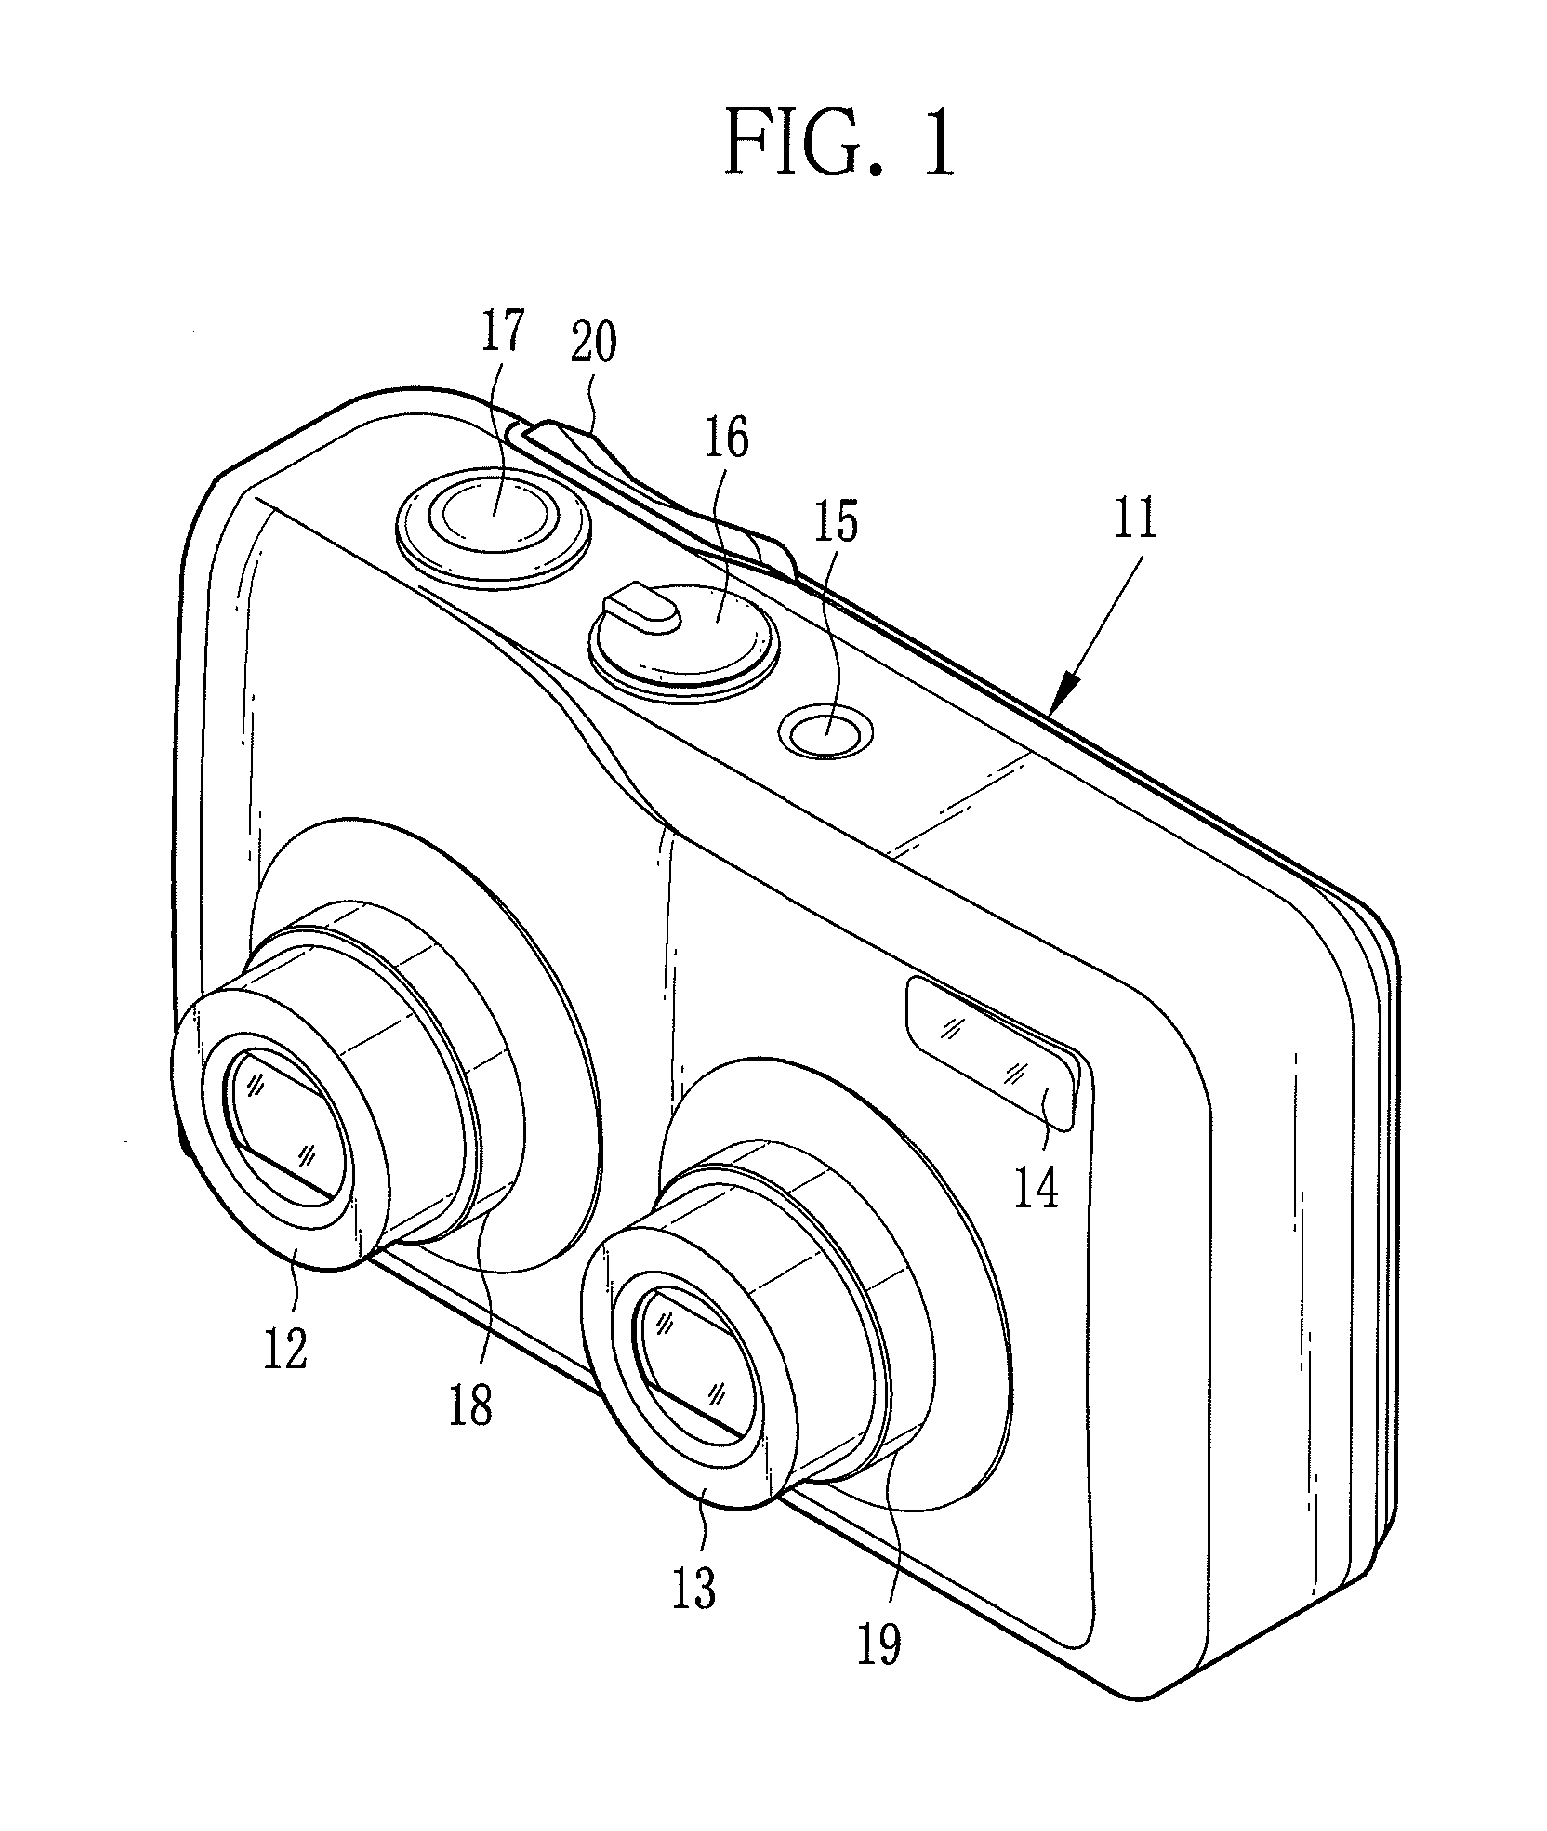 Multi-eye image pickup device